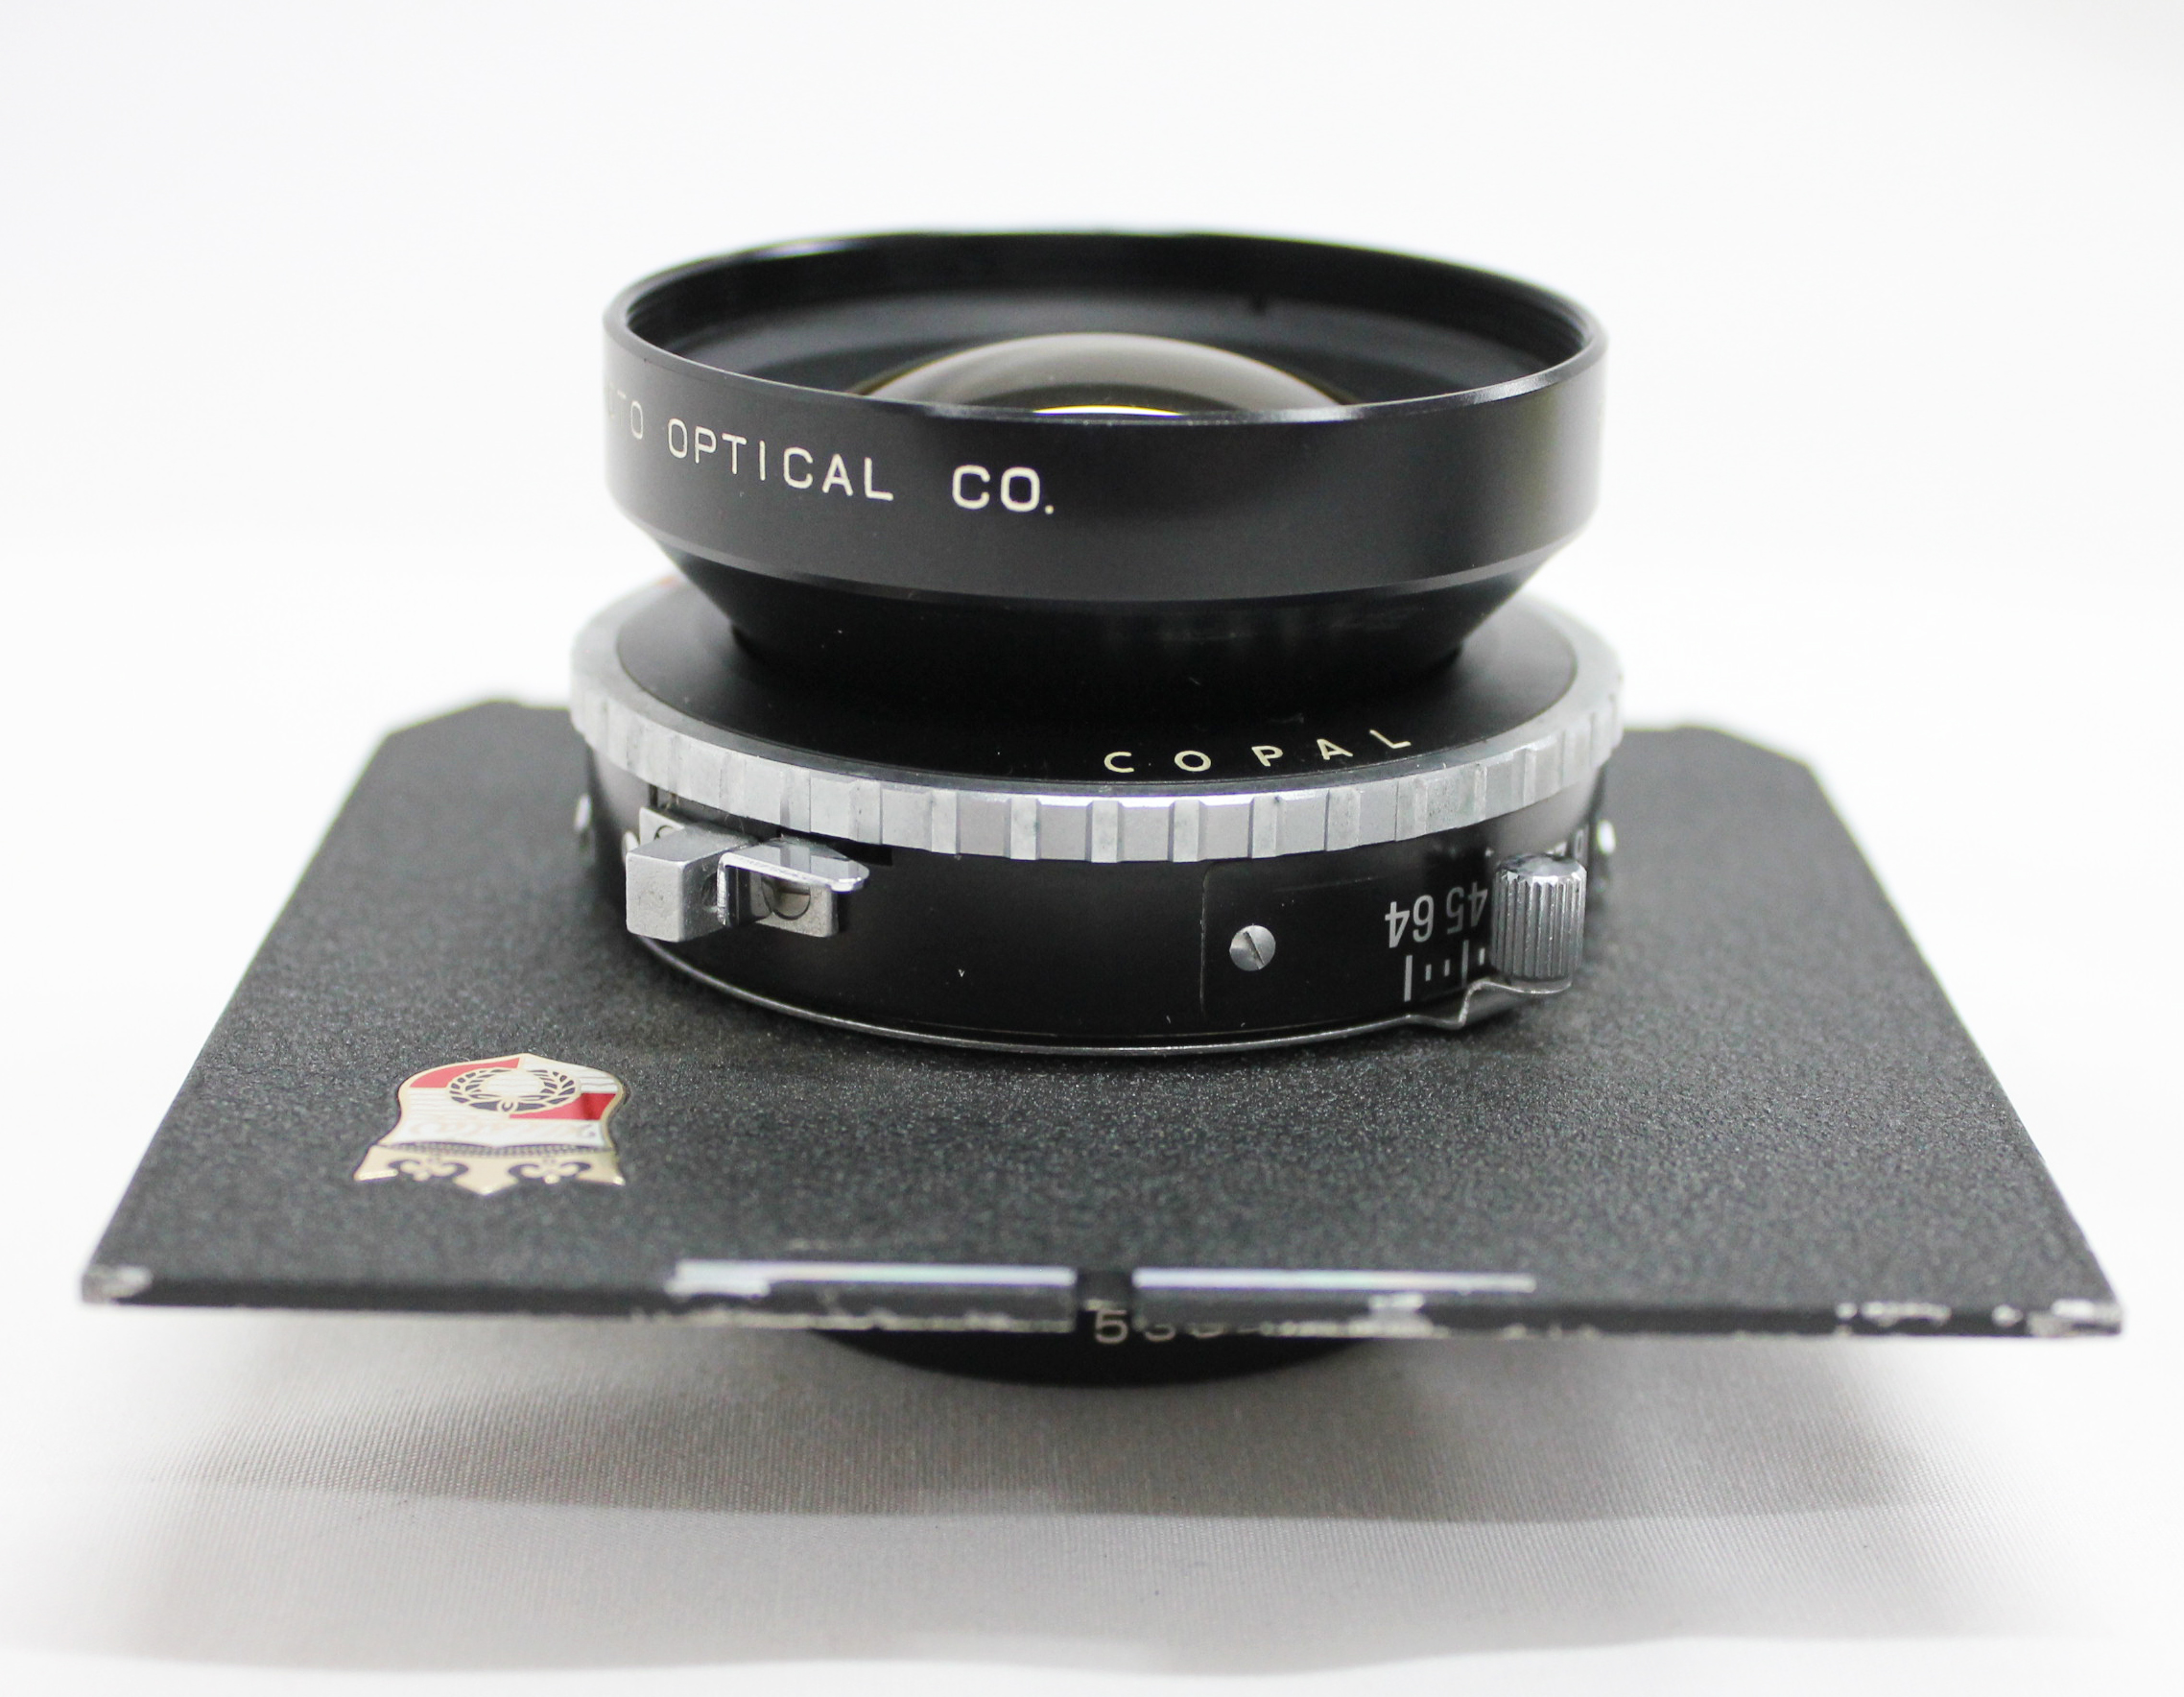 Fuji Fujinon W 150mm F/5.6 4x5 Large Format Lens with Copal Shutter